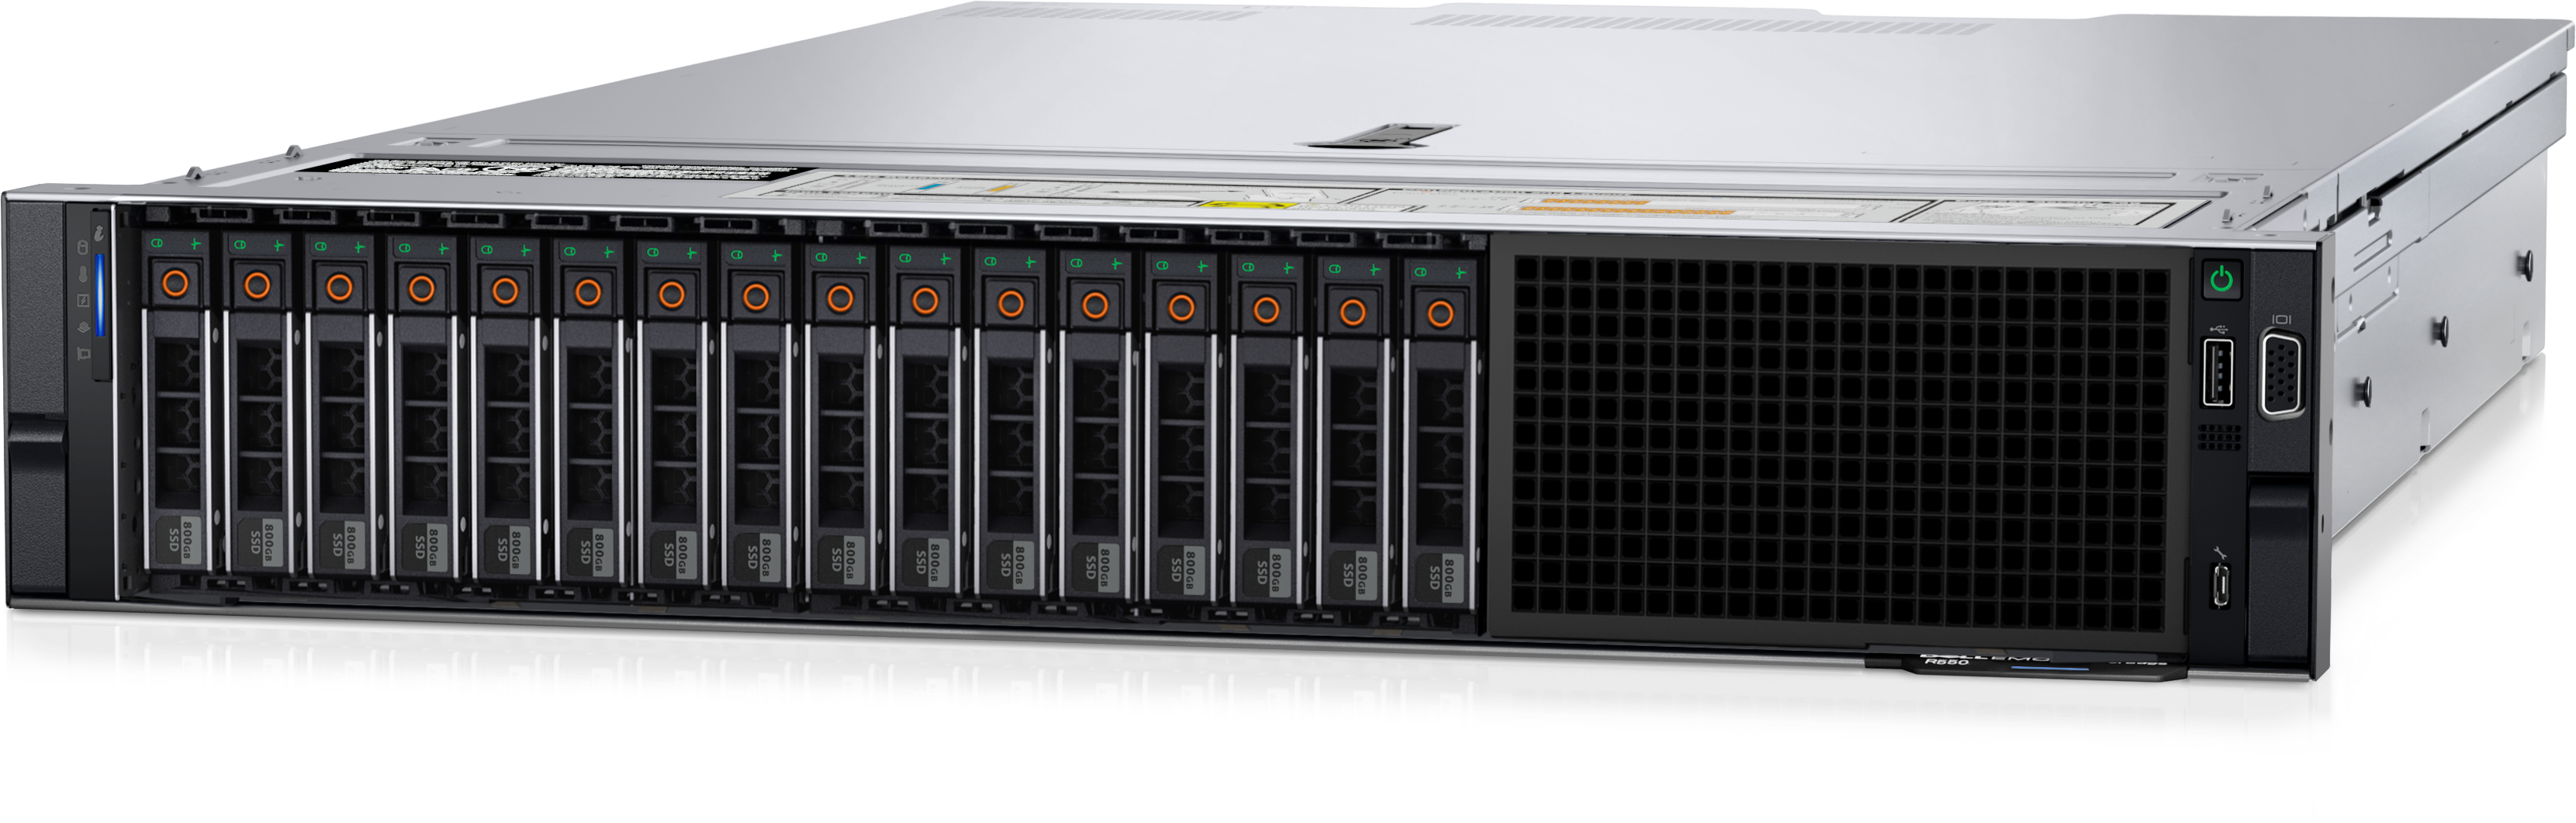 PowerEdge R550 Rack Server